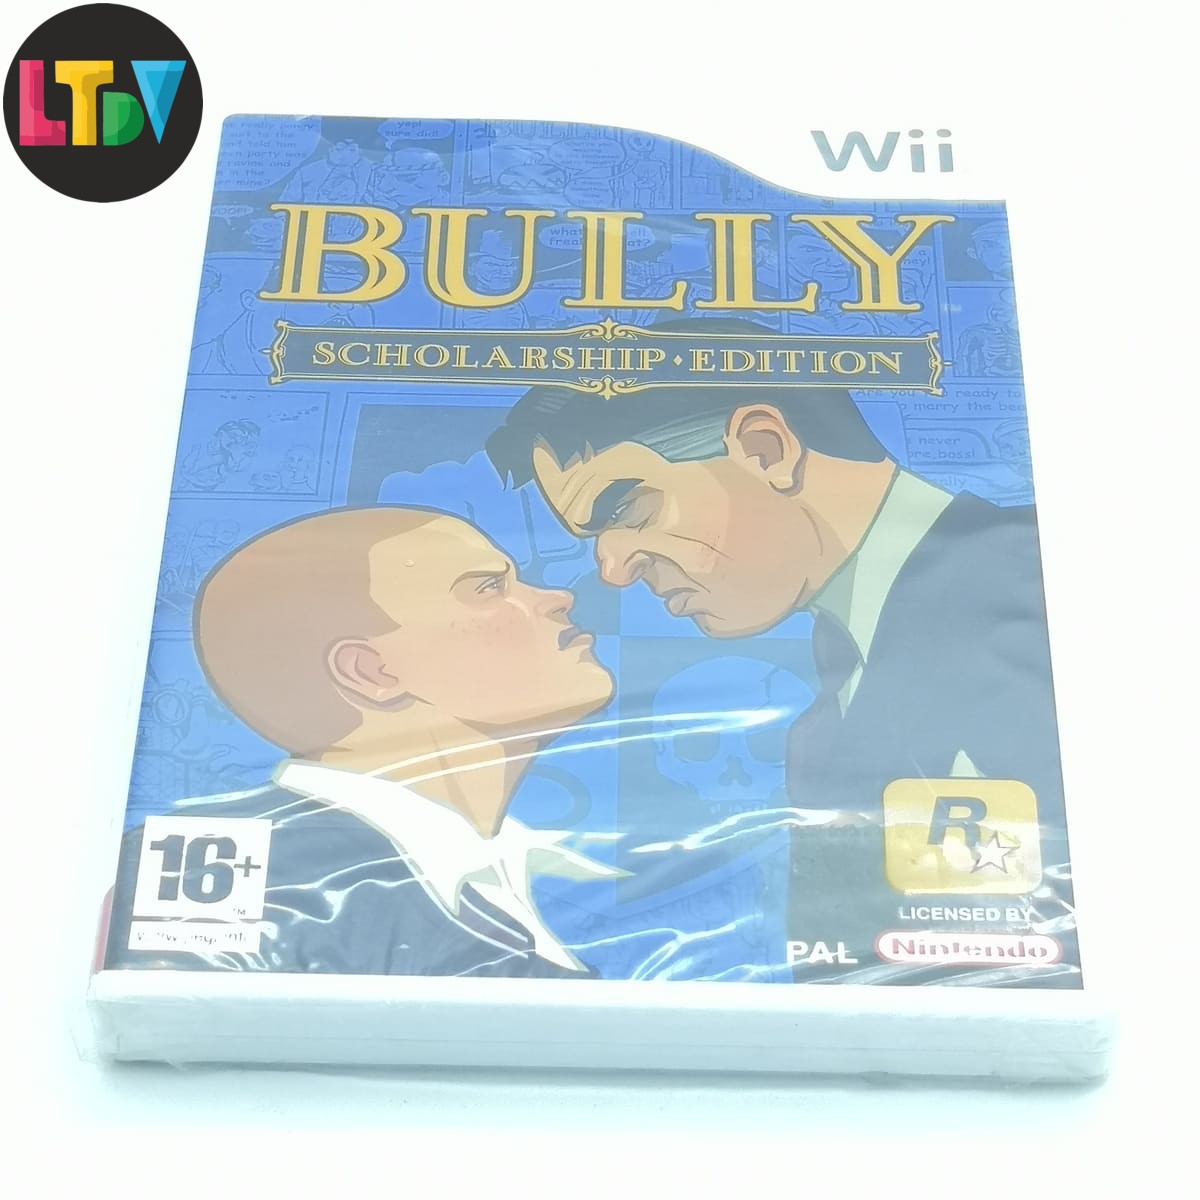 Bully scholarship edition wii pal ita